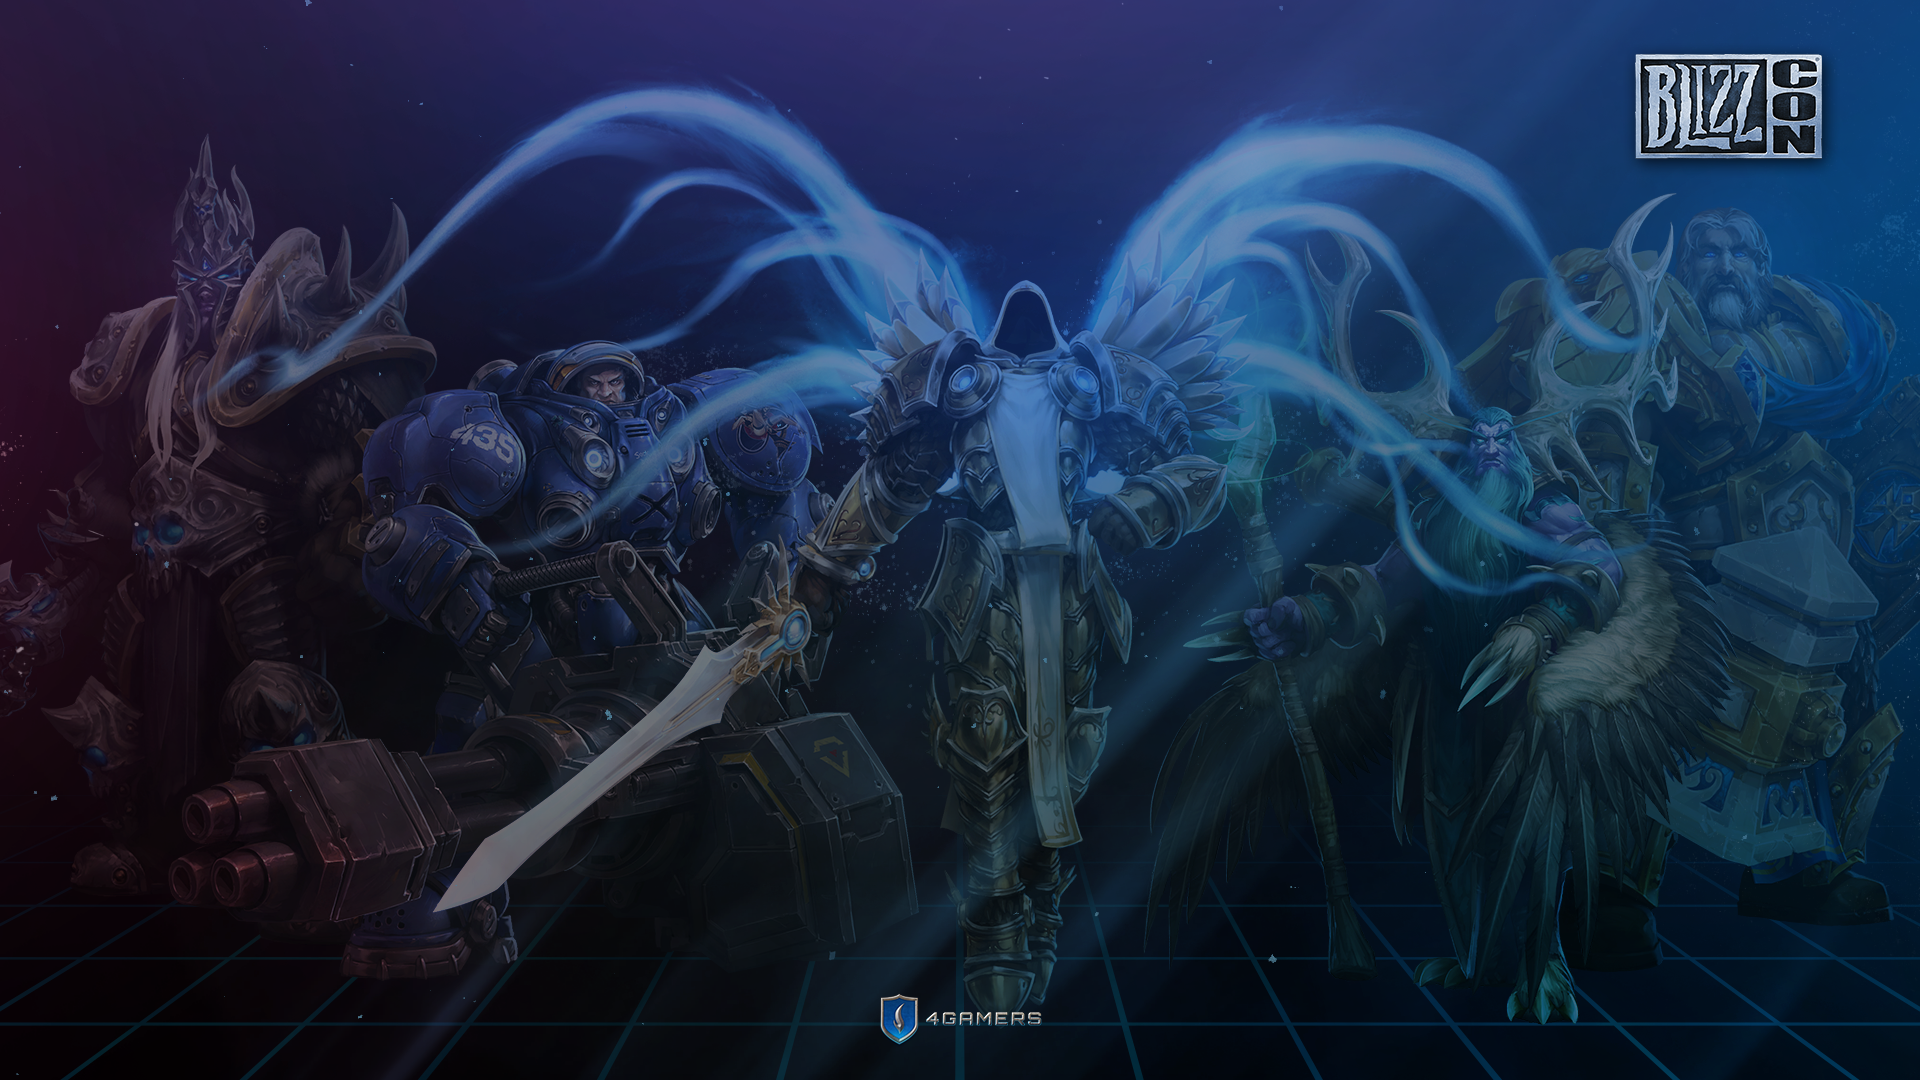 Heroes Blizzard Entertainment Wallpaper